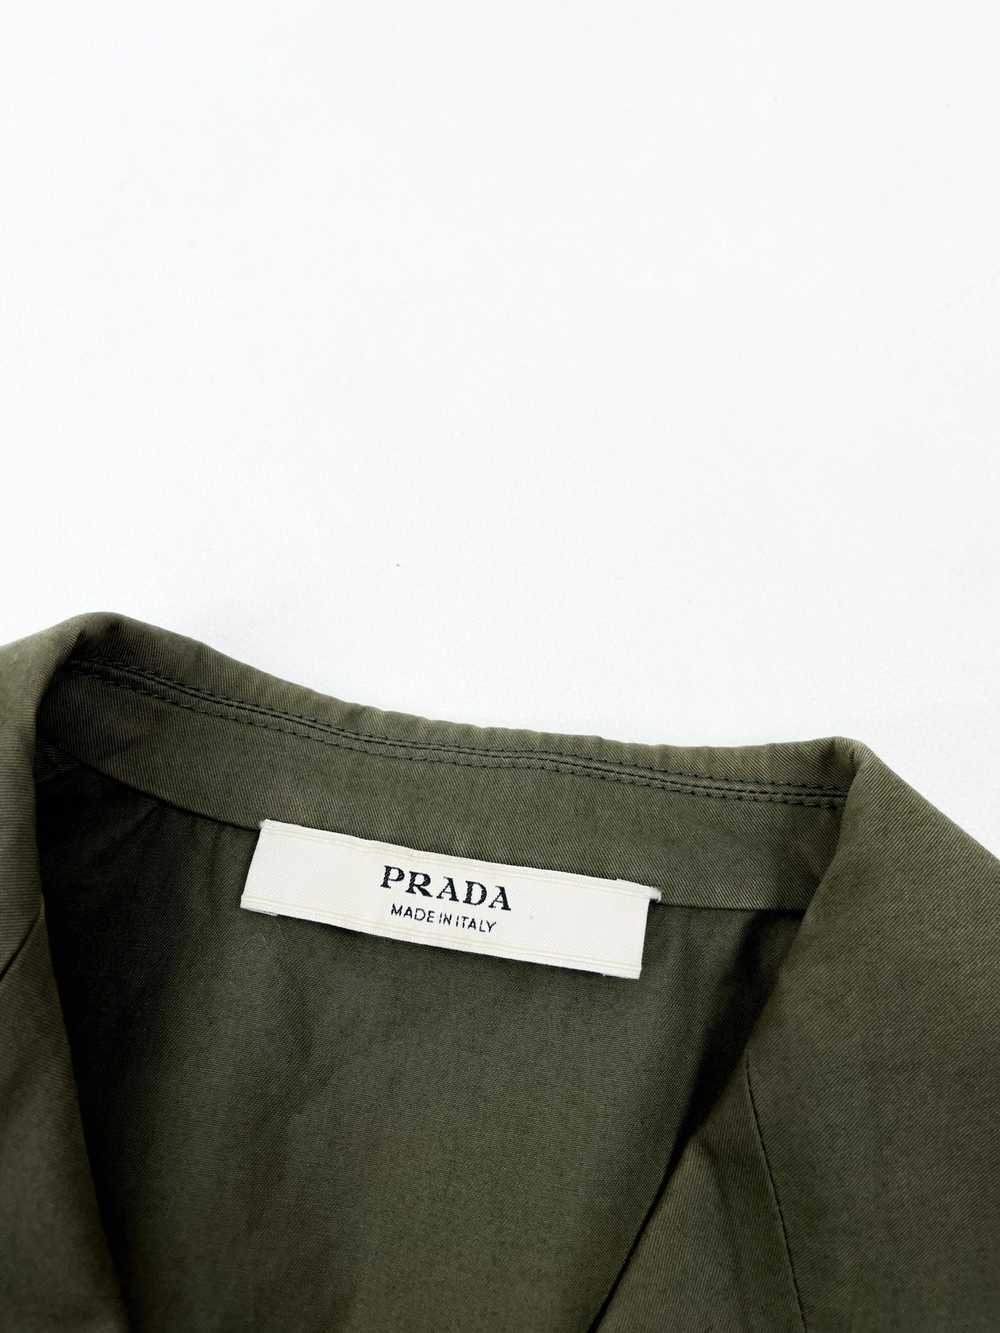 Prada Prada olive green blazer jacket - image 7